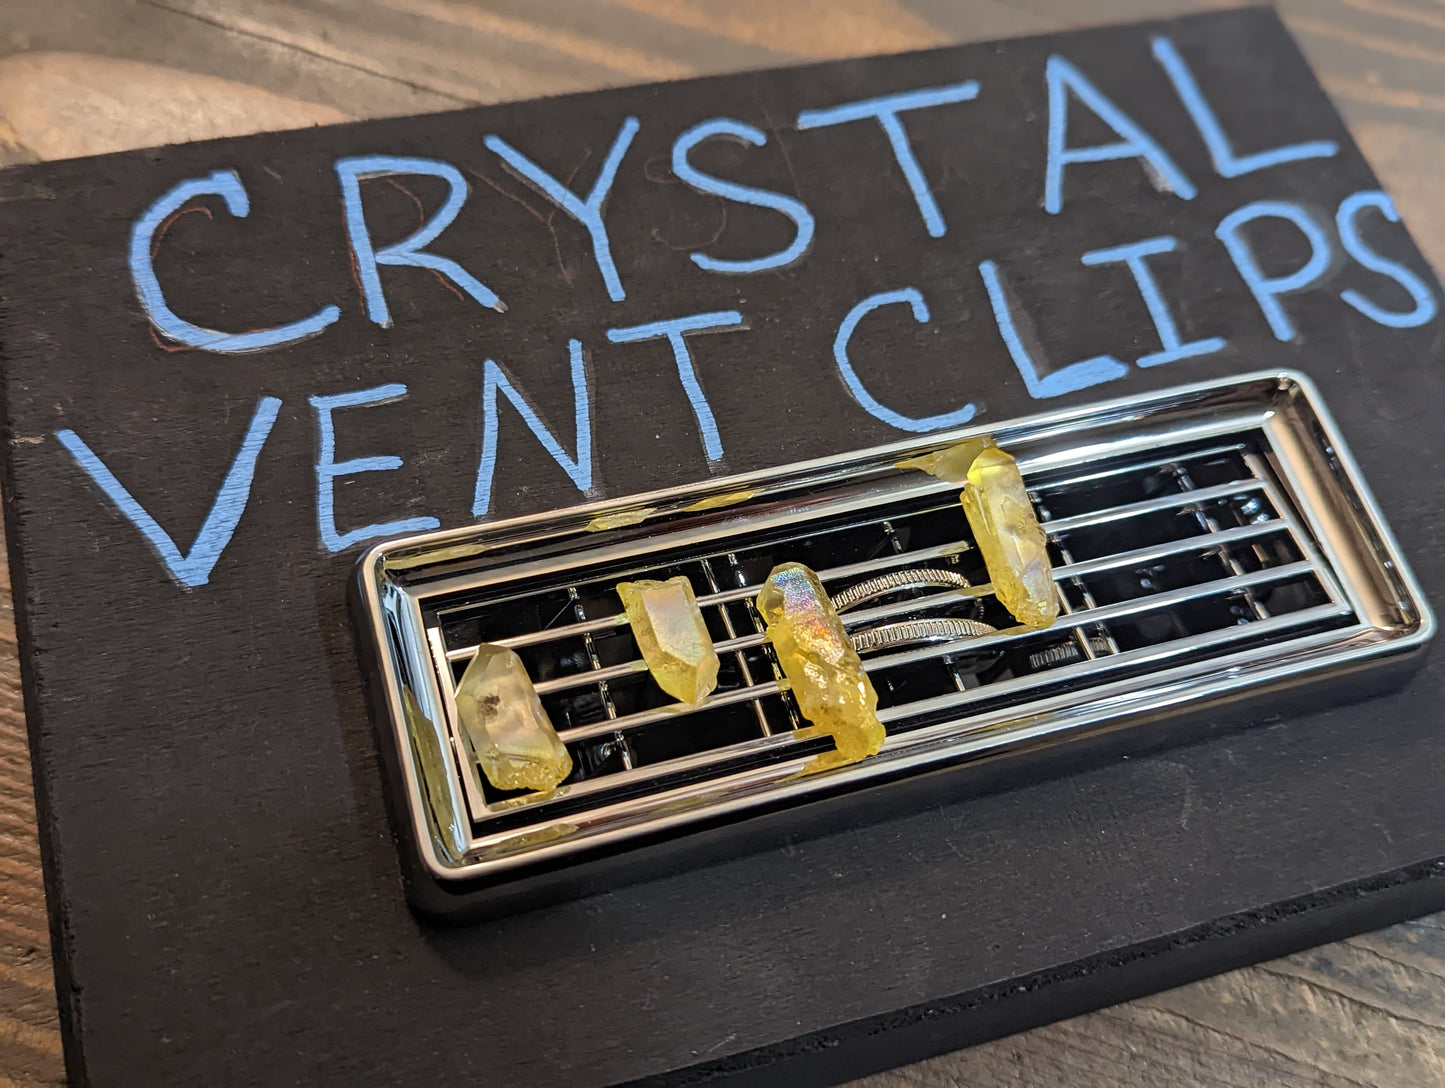 Yellow Aura Crystal "Car-ma" Vent Clips